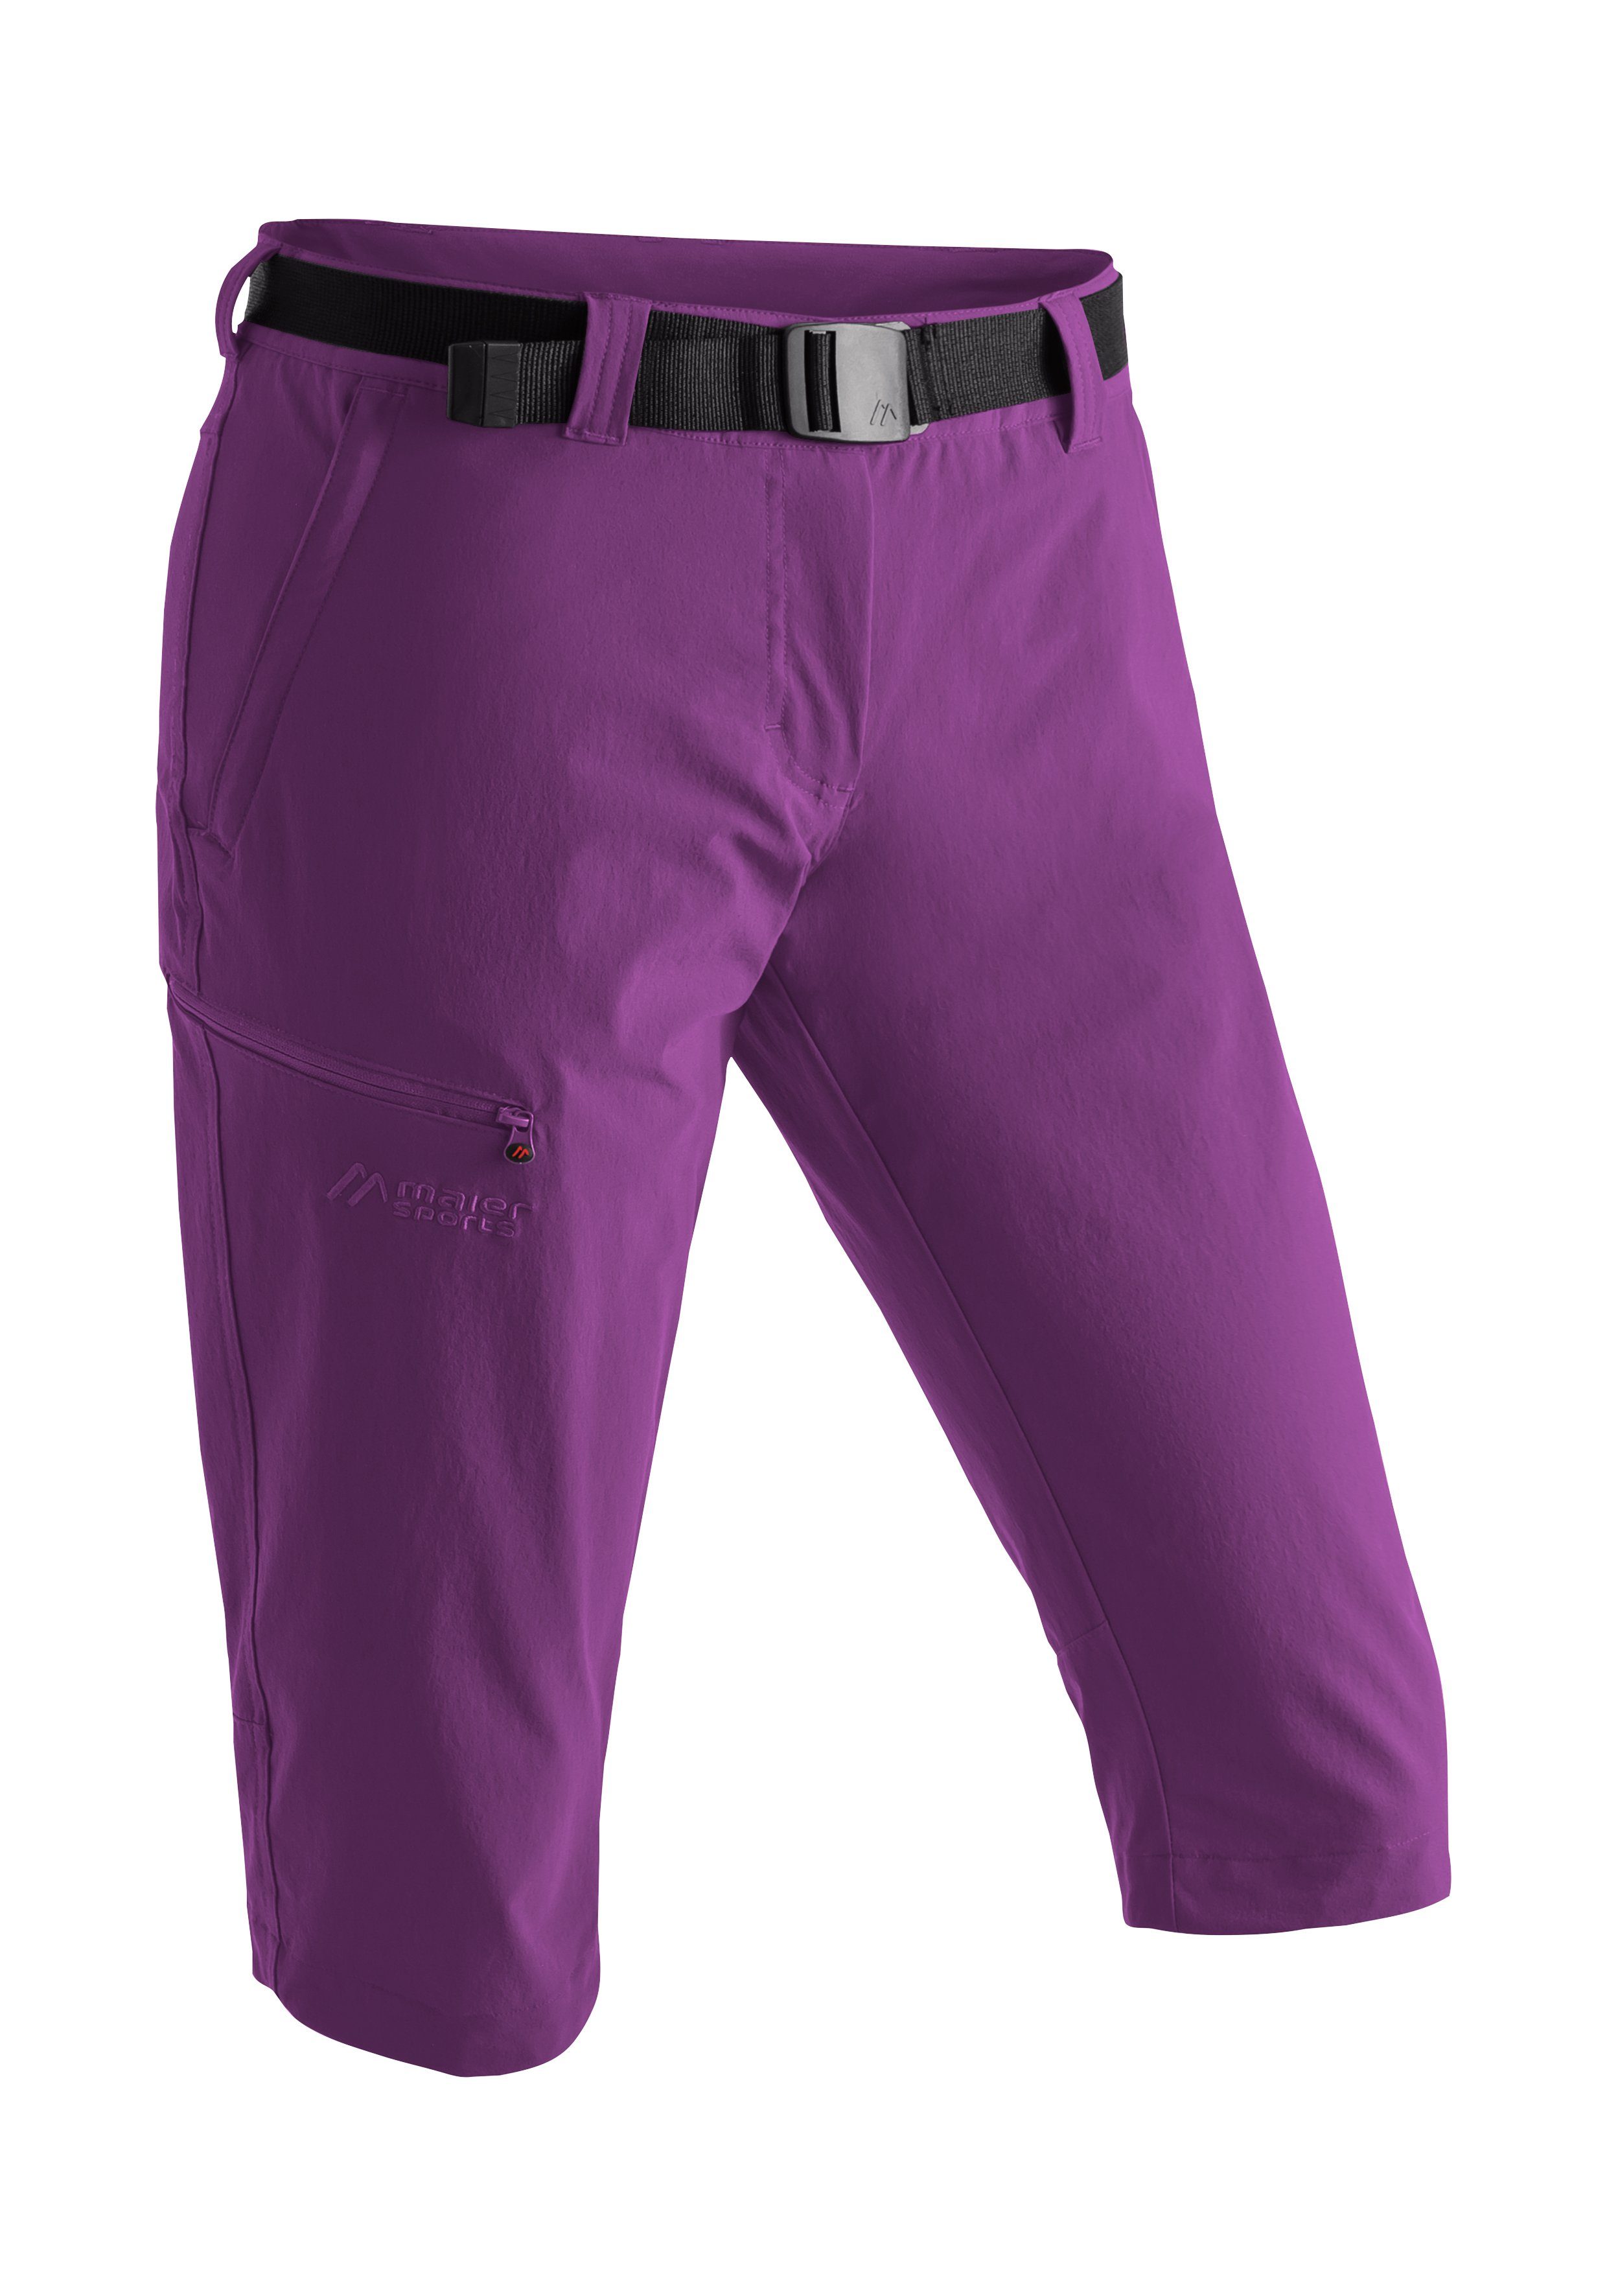 atmungsaktive Wanderhose, Outdoor-Hose 3/4 Sports slim Maier Caprihose Damen purpurviolett Inara